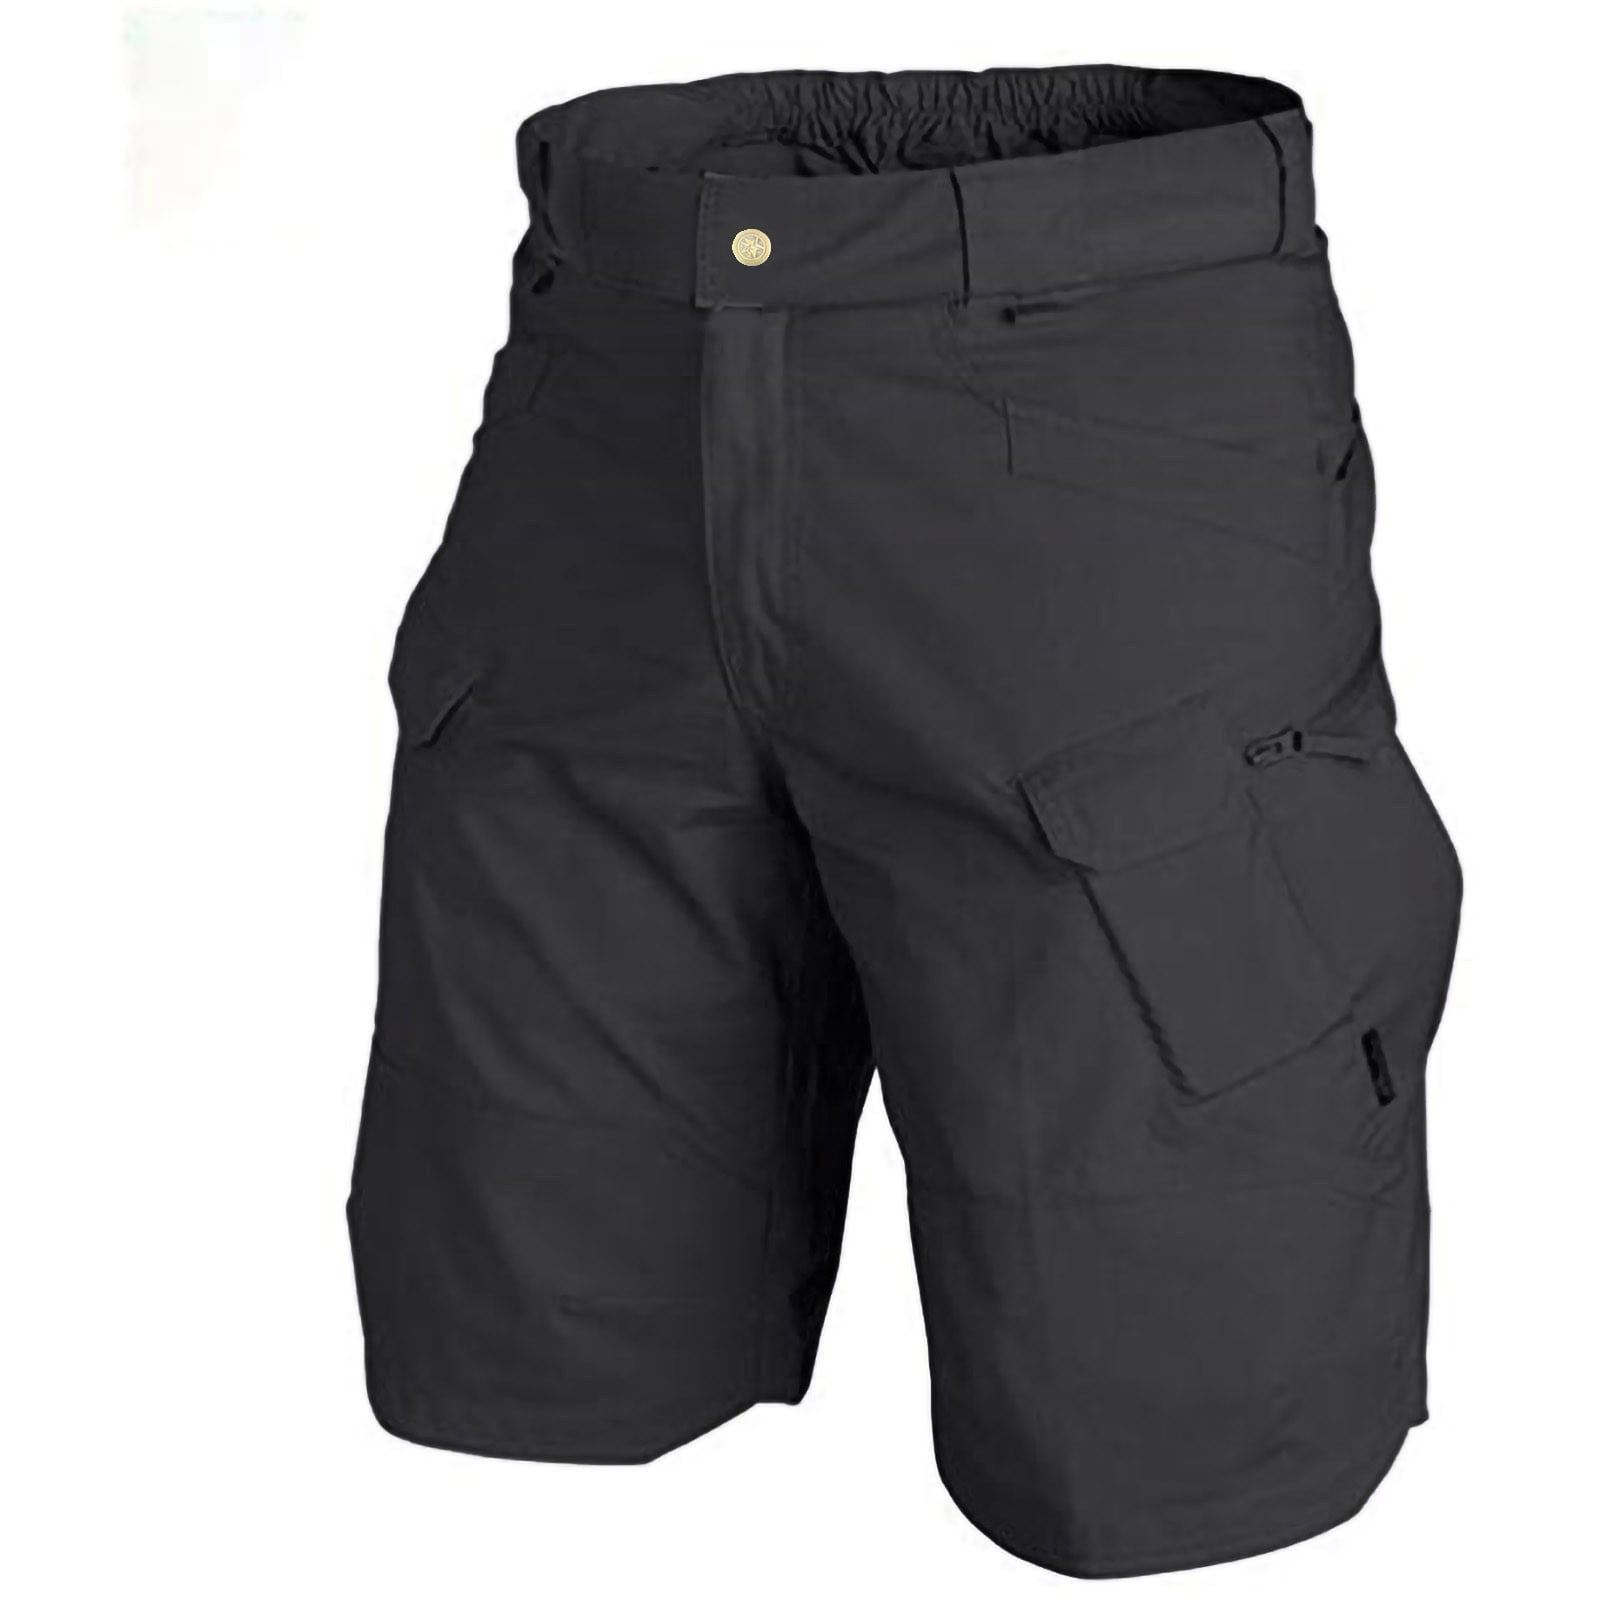 Hfyihgf Mens Hiking Cargo Shorts Quick-Dry Outdoor Athletic Short ...